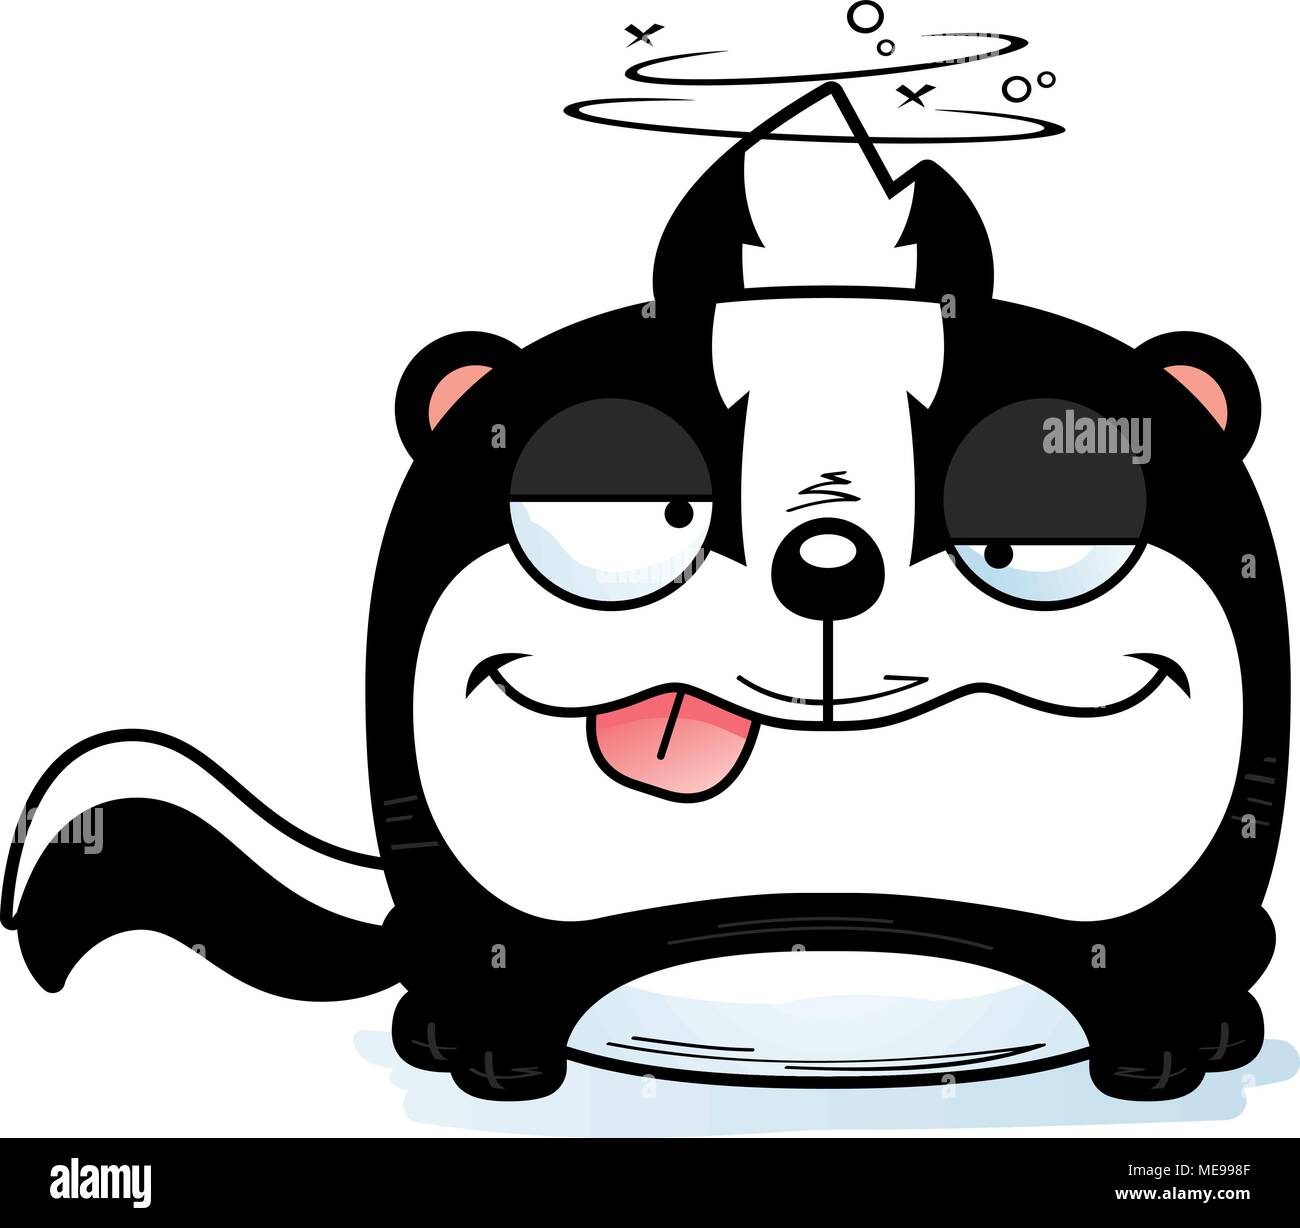 Eine Karikatur Illustration ein Stinktier mit goofy Ausdruck. Stock Vektor